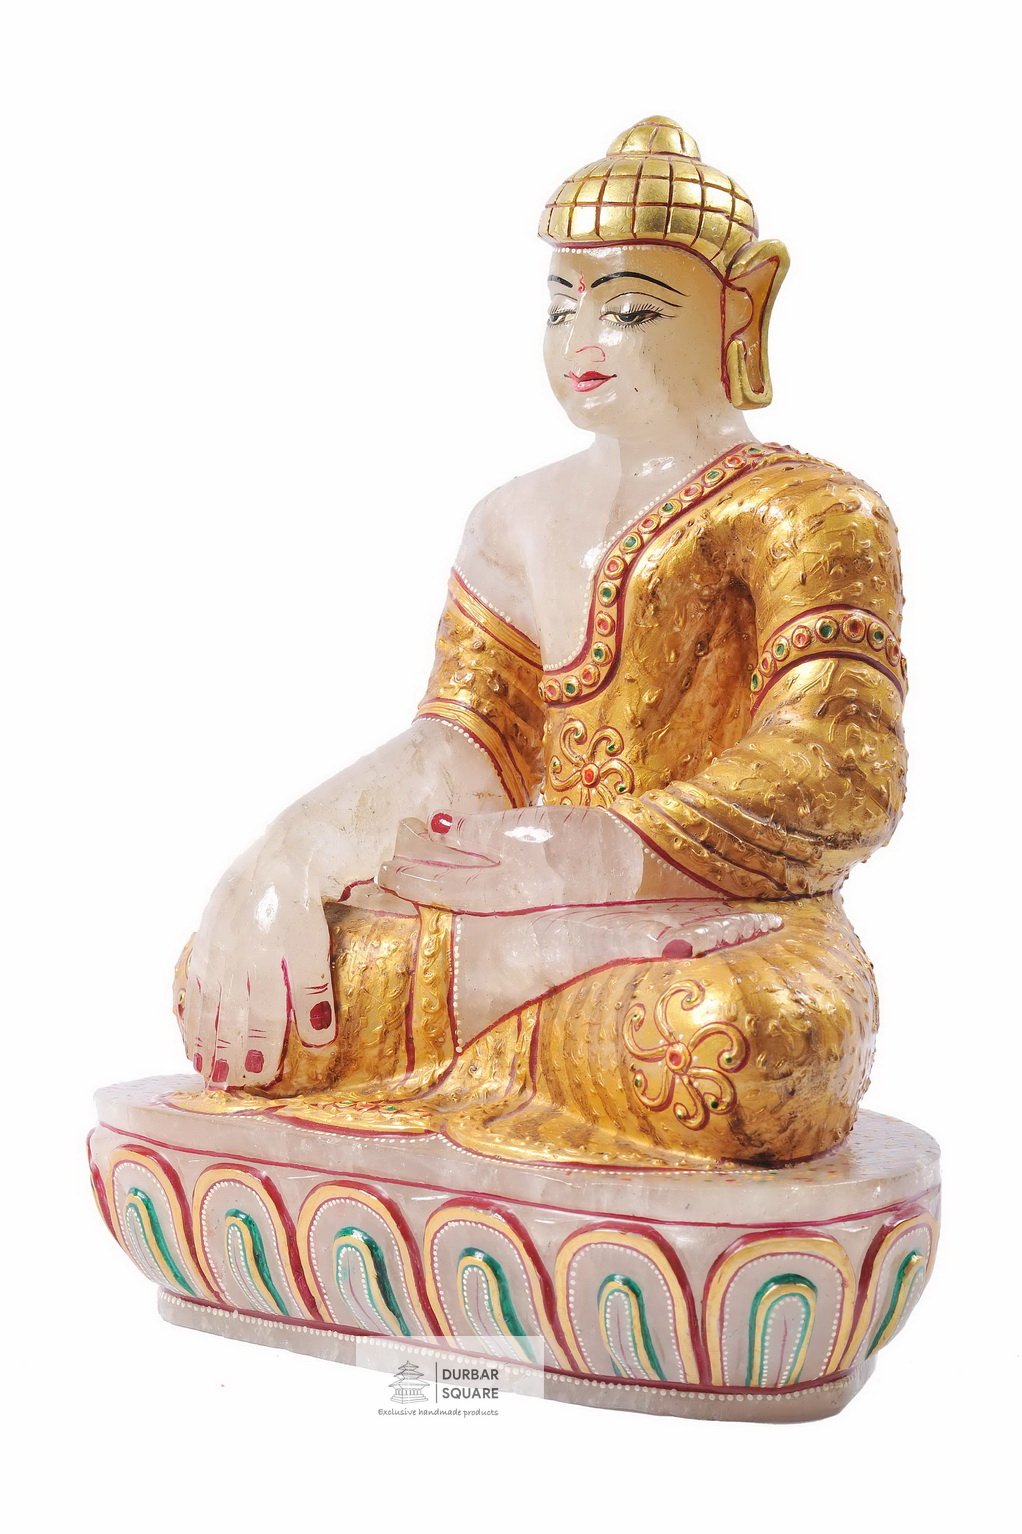 Cyrstal Shakyamuni Buddha Statue